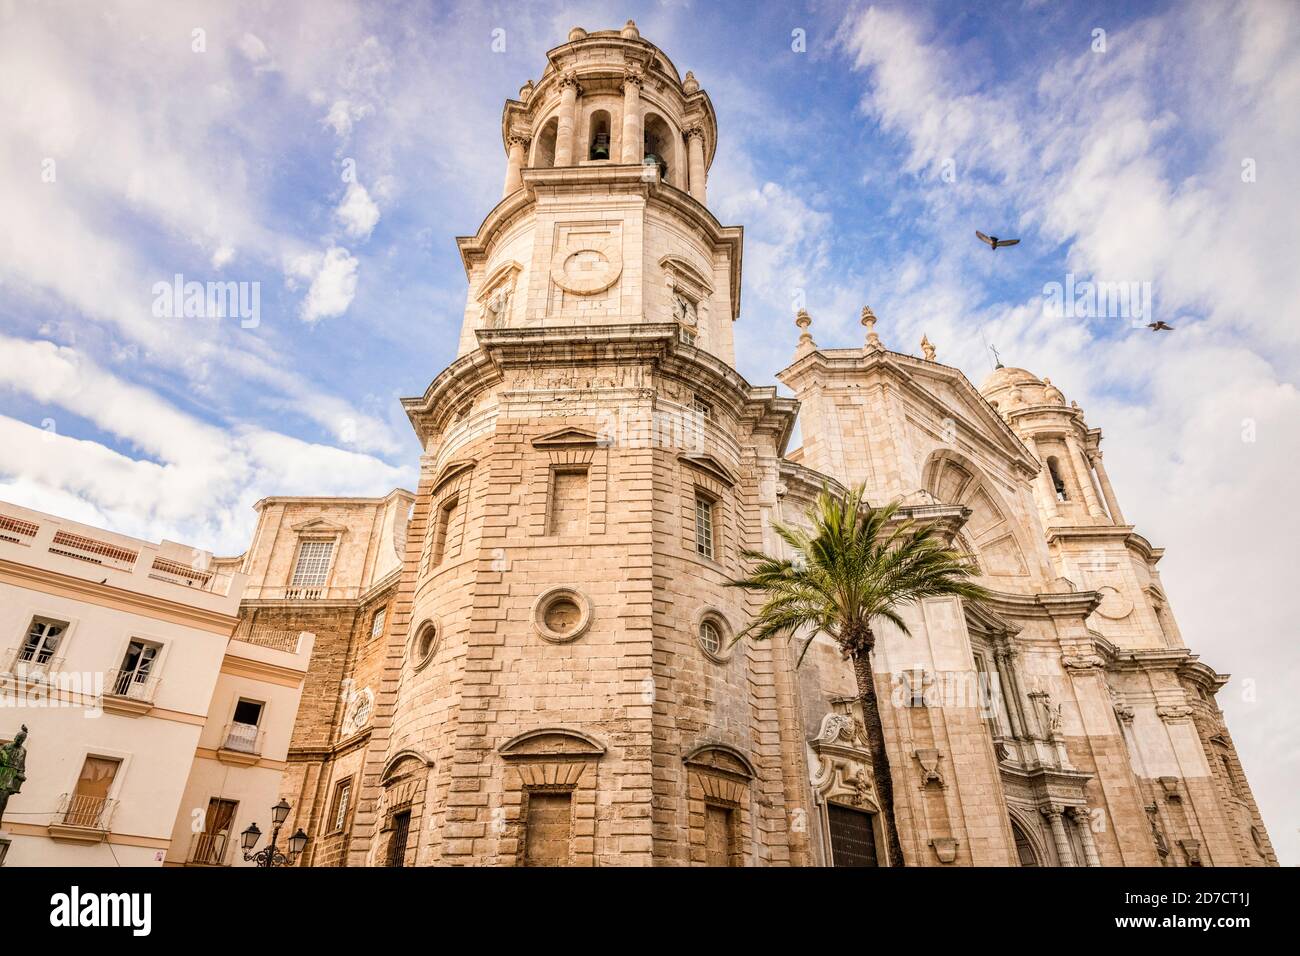 12 mars 2020: Cadix, Espagne - la façade nord de la cathédrale de Santa Cruz, Cathédrale de Cadix Banque D'Images